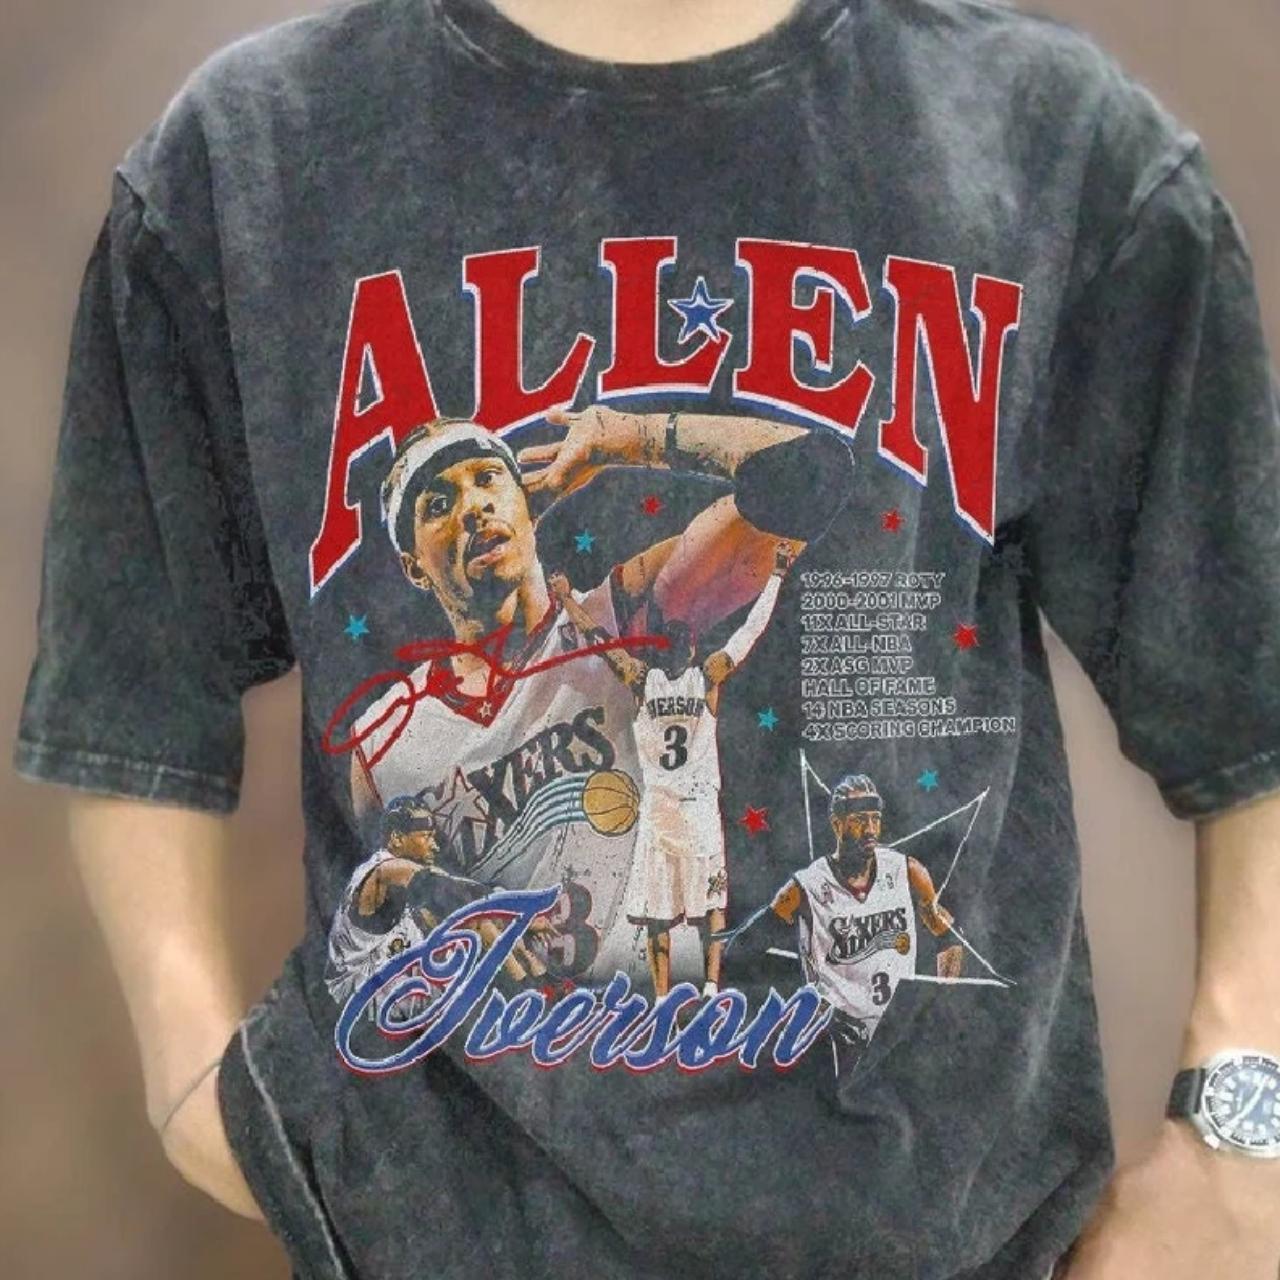 Allen Iverson T-Shirt